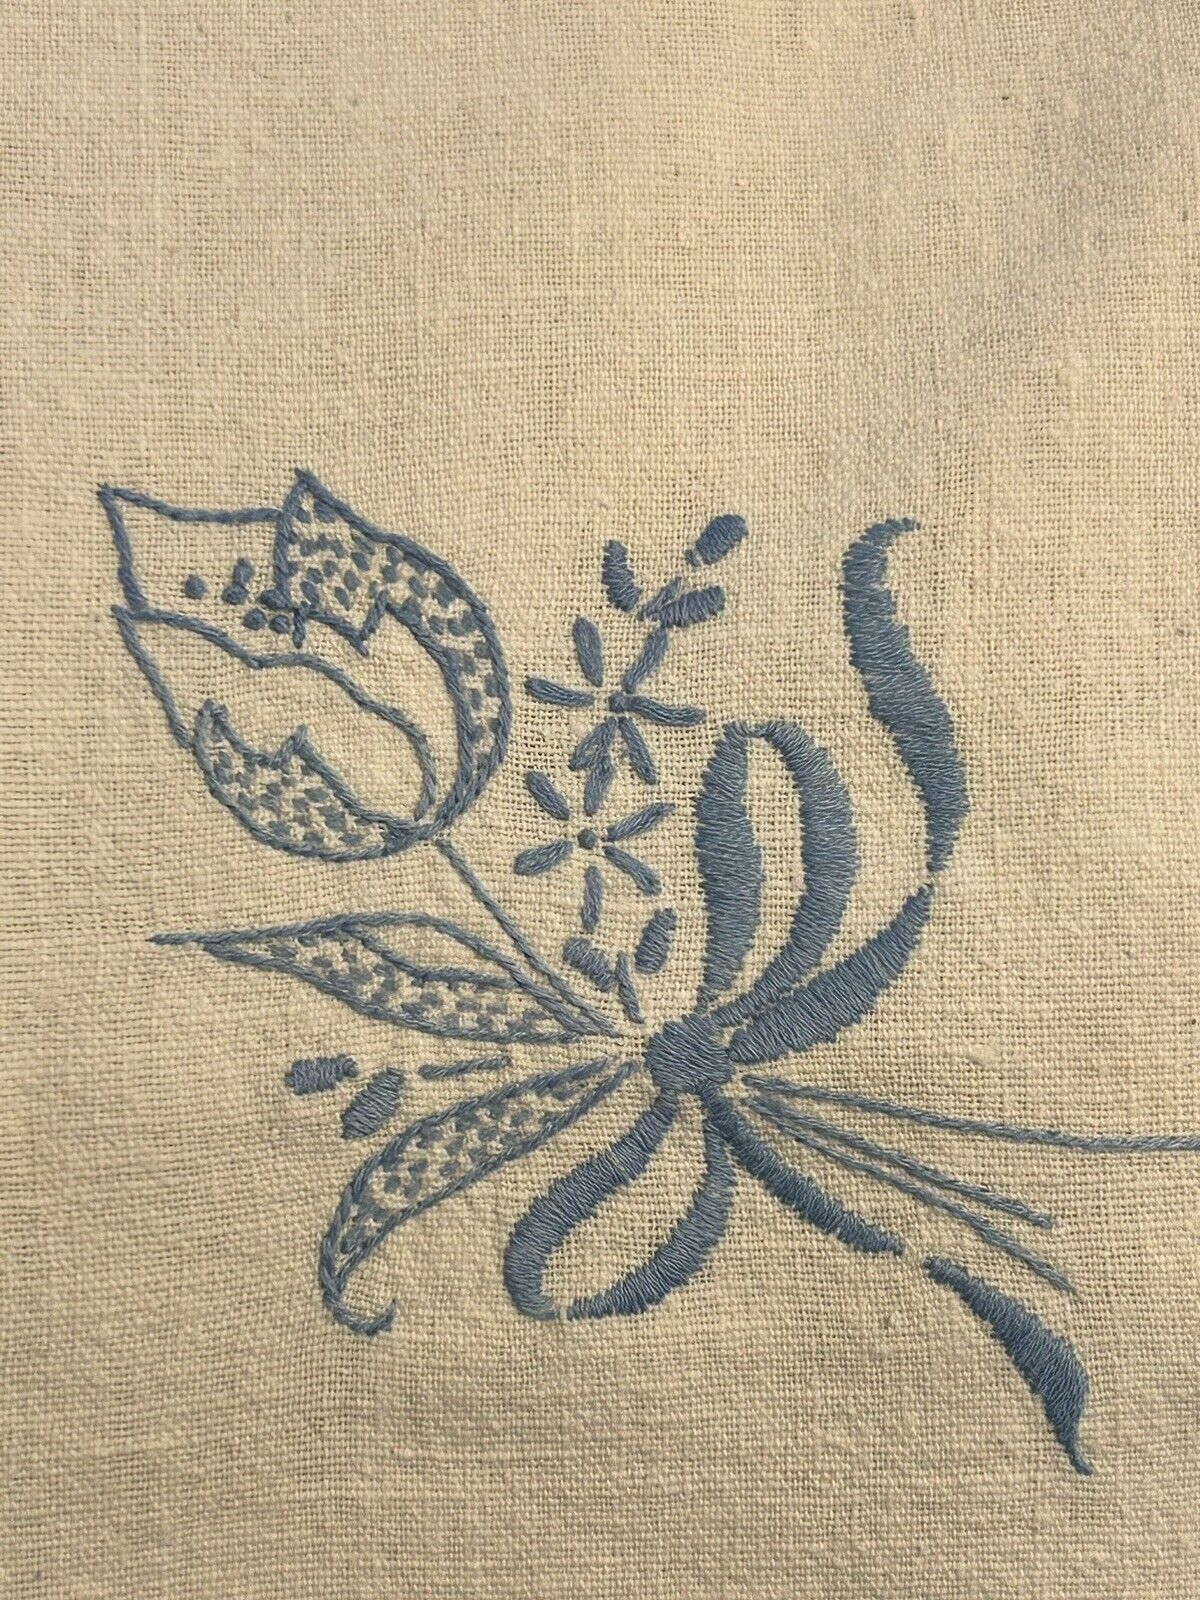 Vintage Linen Tablecloth Table Topper Blue Flower Ribbon Embroidery Flour Sack